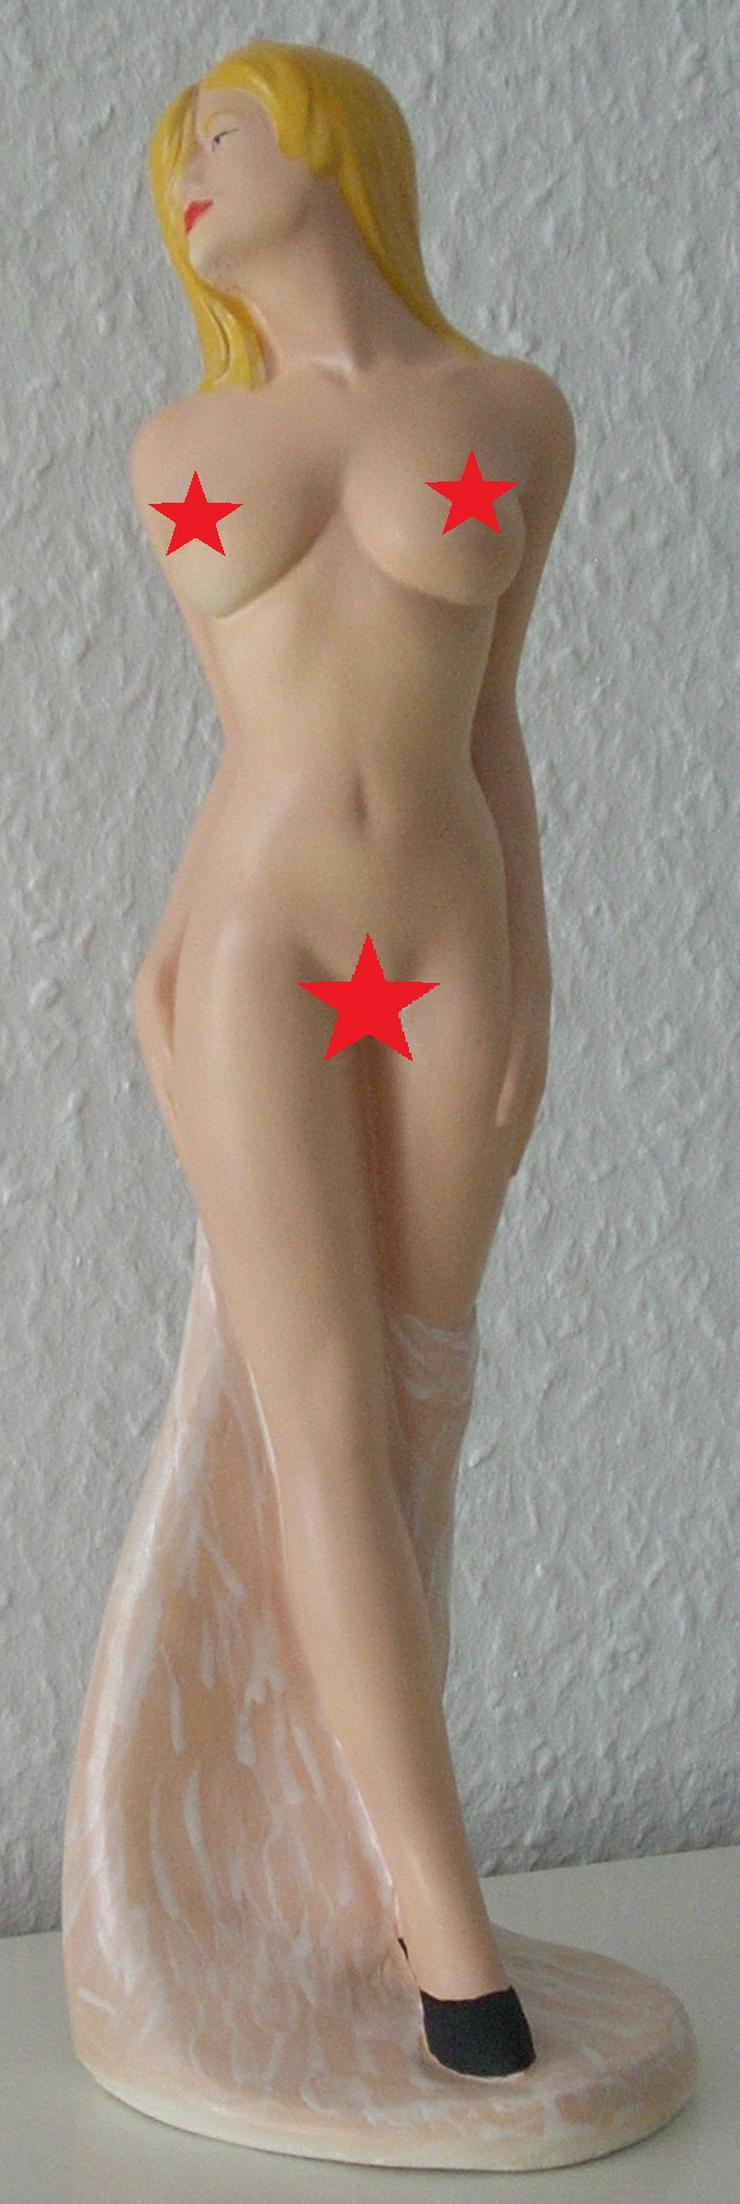 Pin-up Figur - The Lady - Künstlerin: Desislava Stanjova